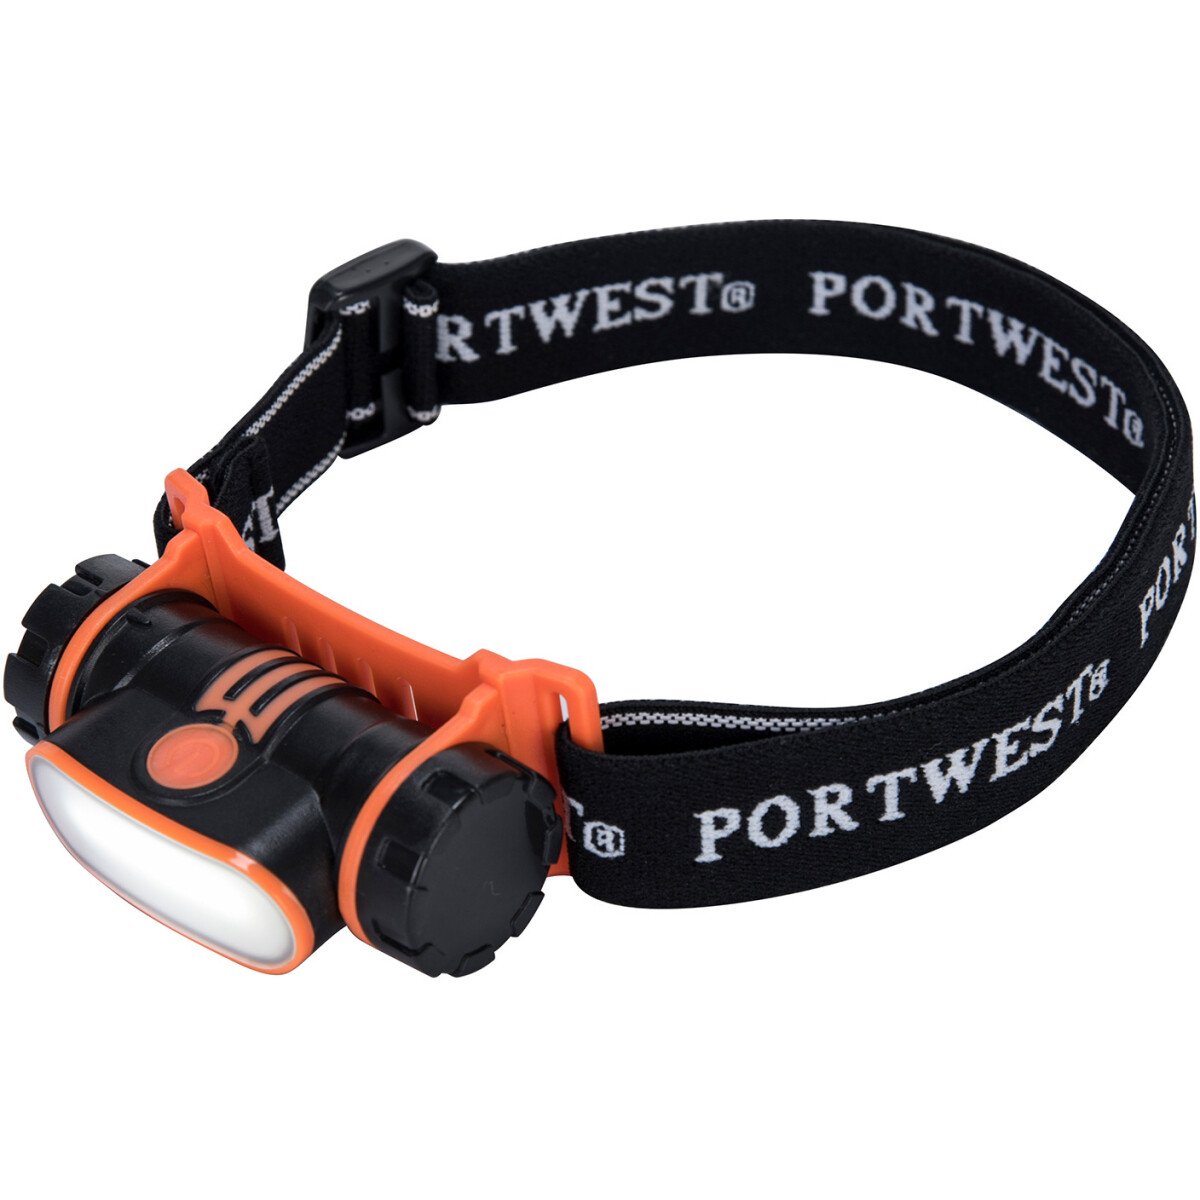 Portwest PA70 USB Rechargeable LED Head Light - Orange/Black - One Size